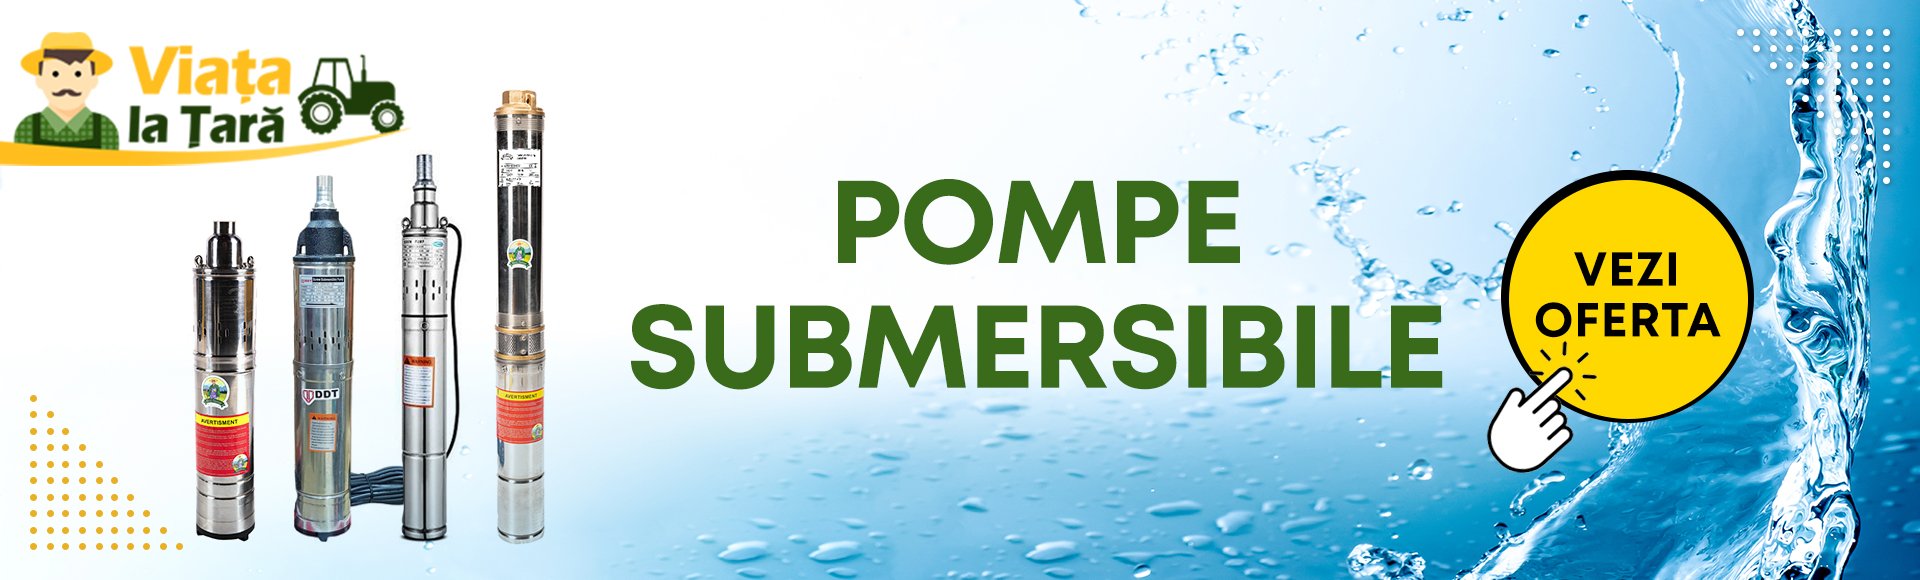 Pompe submersibile